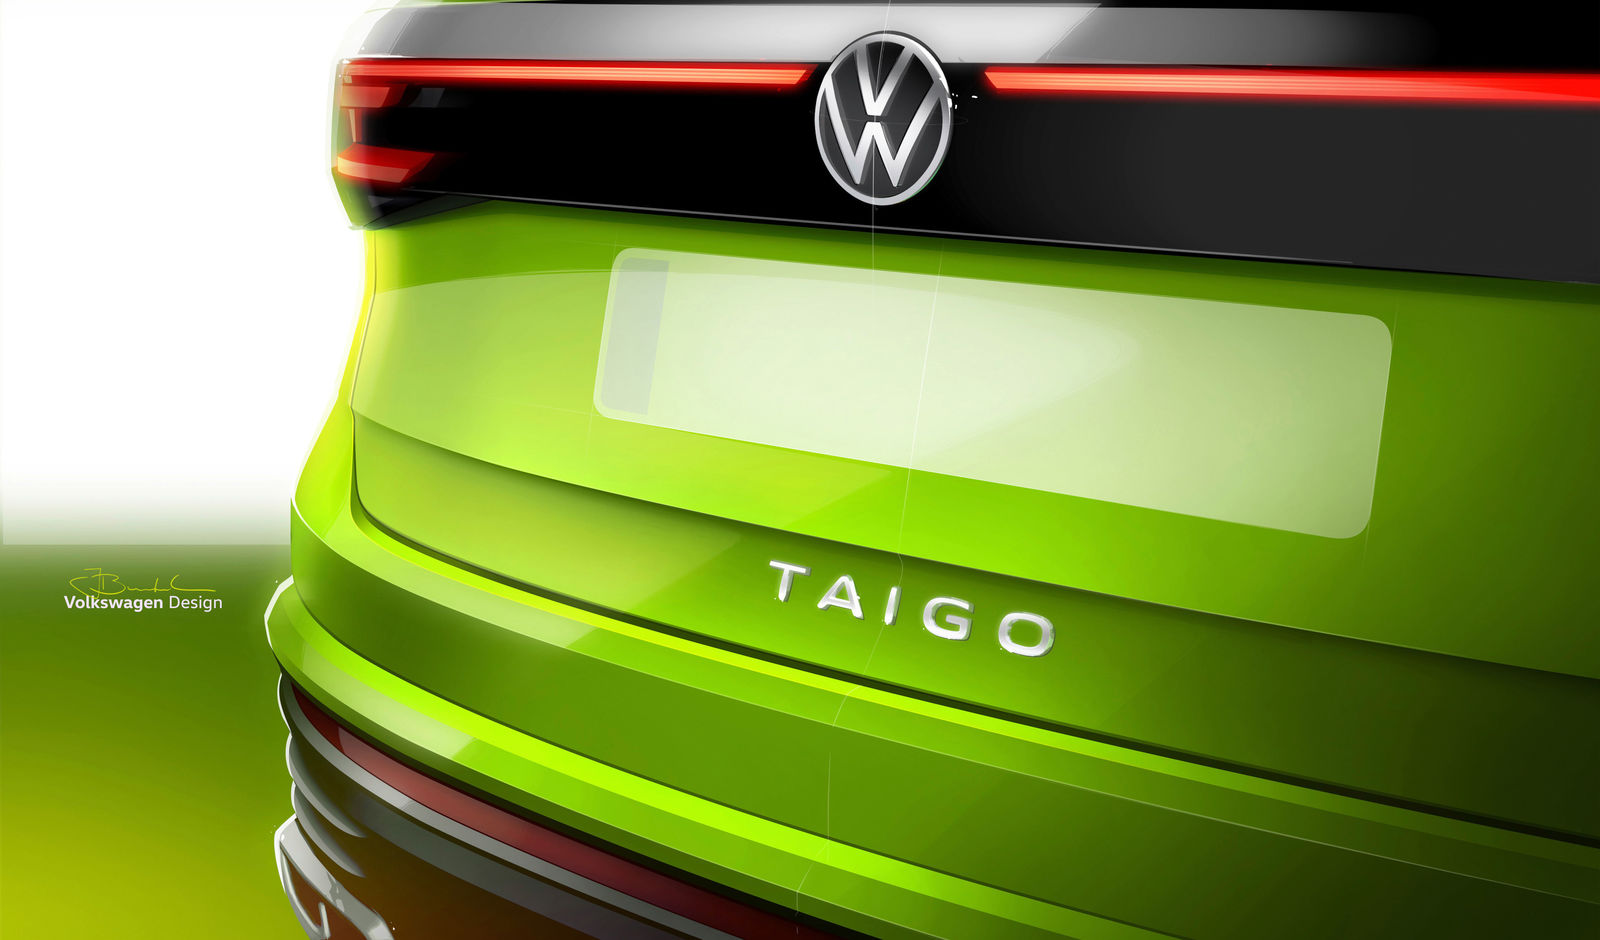 The new Volkswagen Taigo